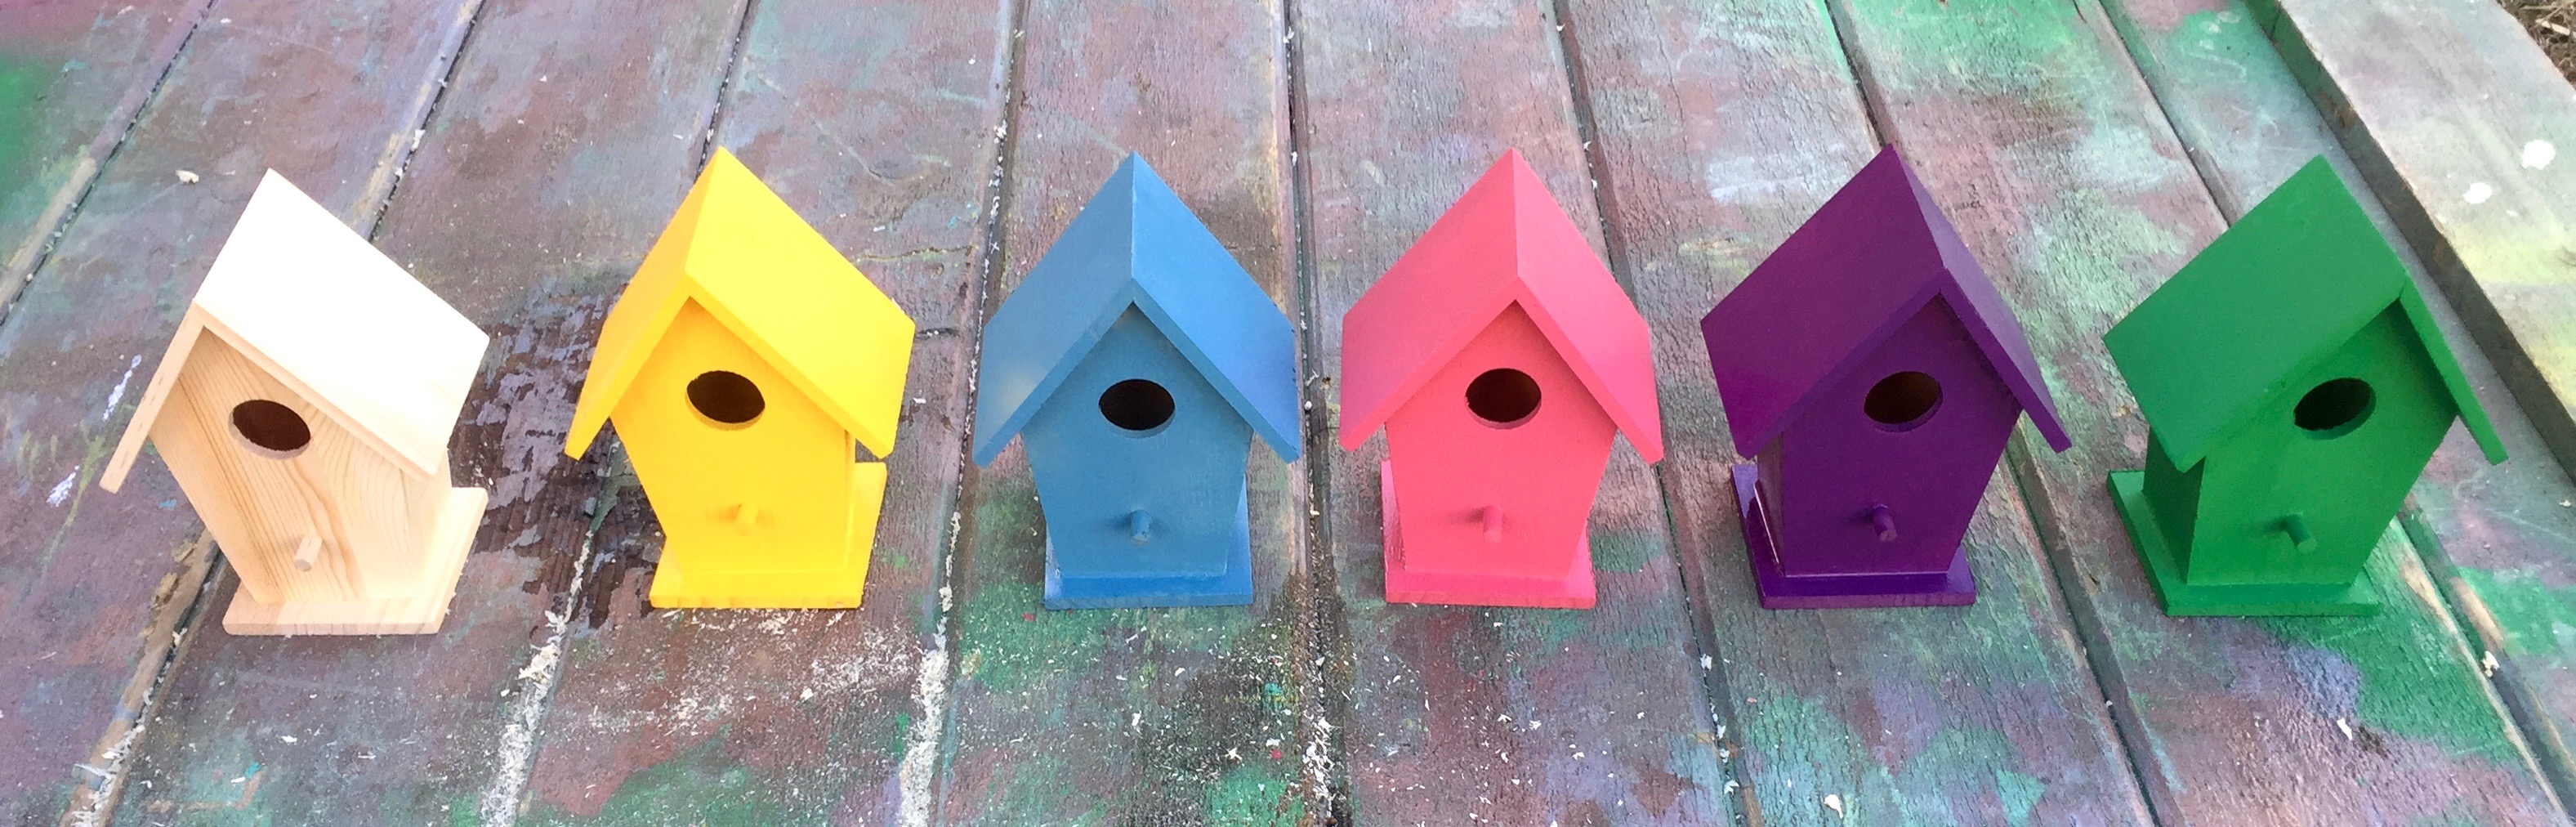 3 Birdhouse succulent craft myfixituplife painted